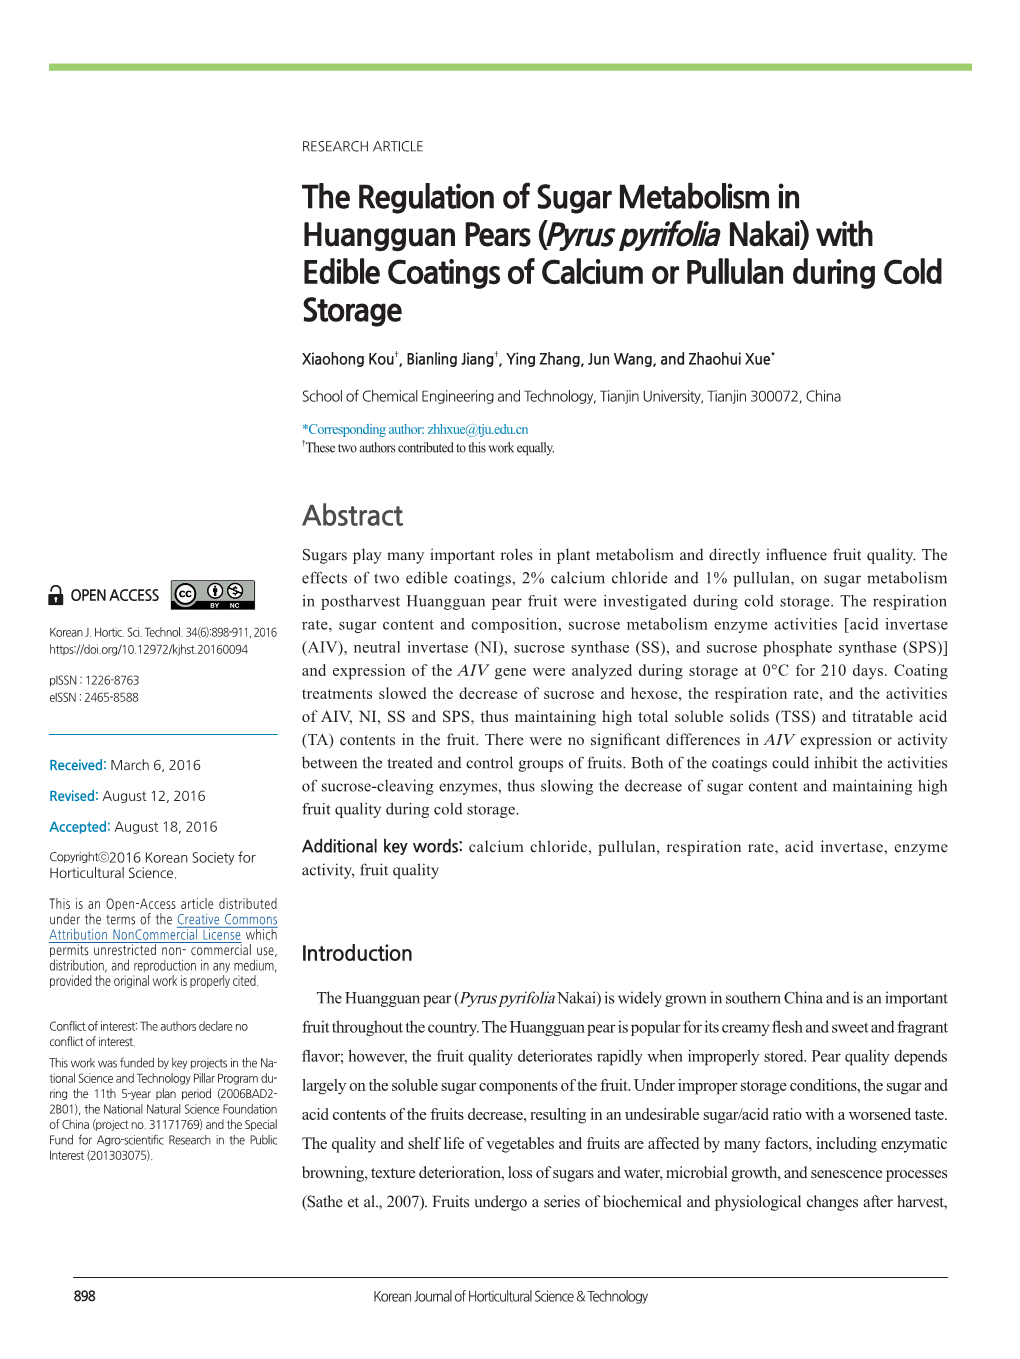 The Regulation of Sugar Metabolism in Huangguan Pears (Pyrus Pyrifolia Nakai) with Edible Coatings of Calcium Or Pullulan During Cold Storage